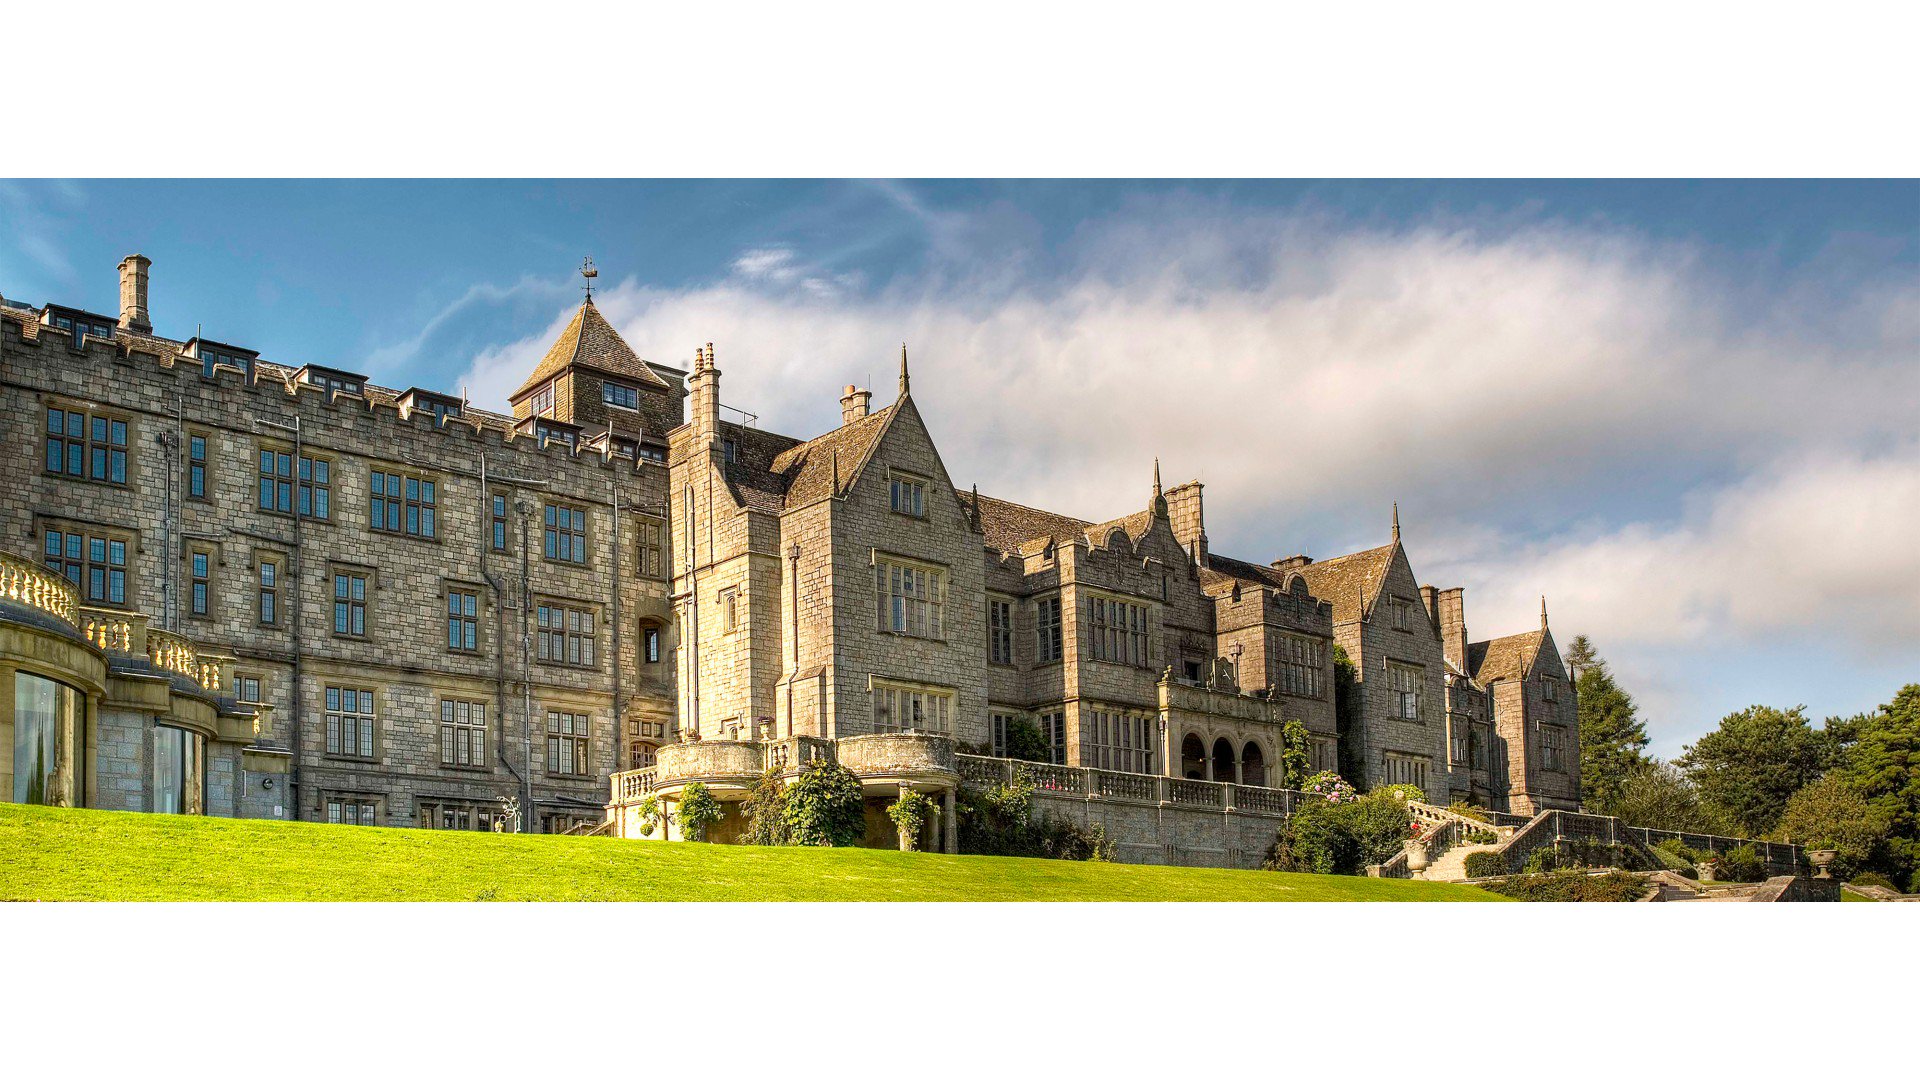 Bovey Castle hotel - Devon - England - Smith Hotels